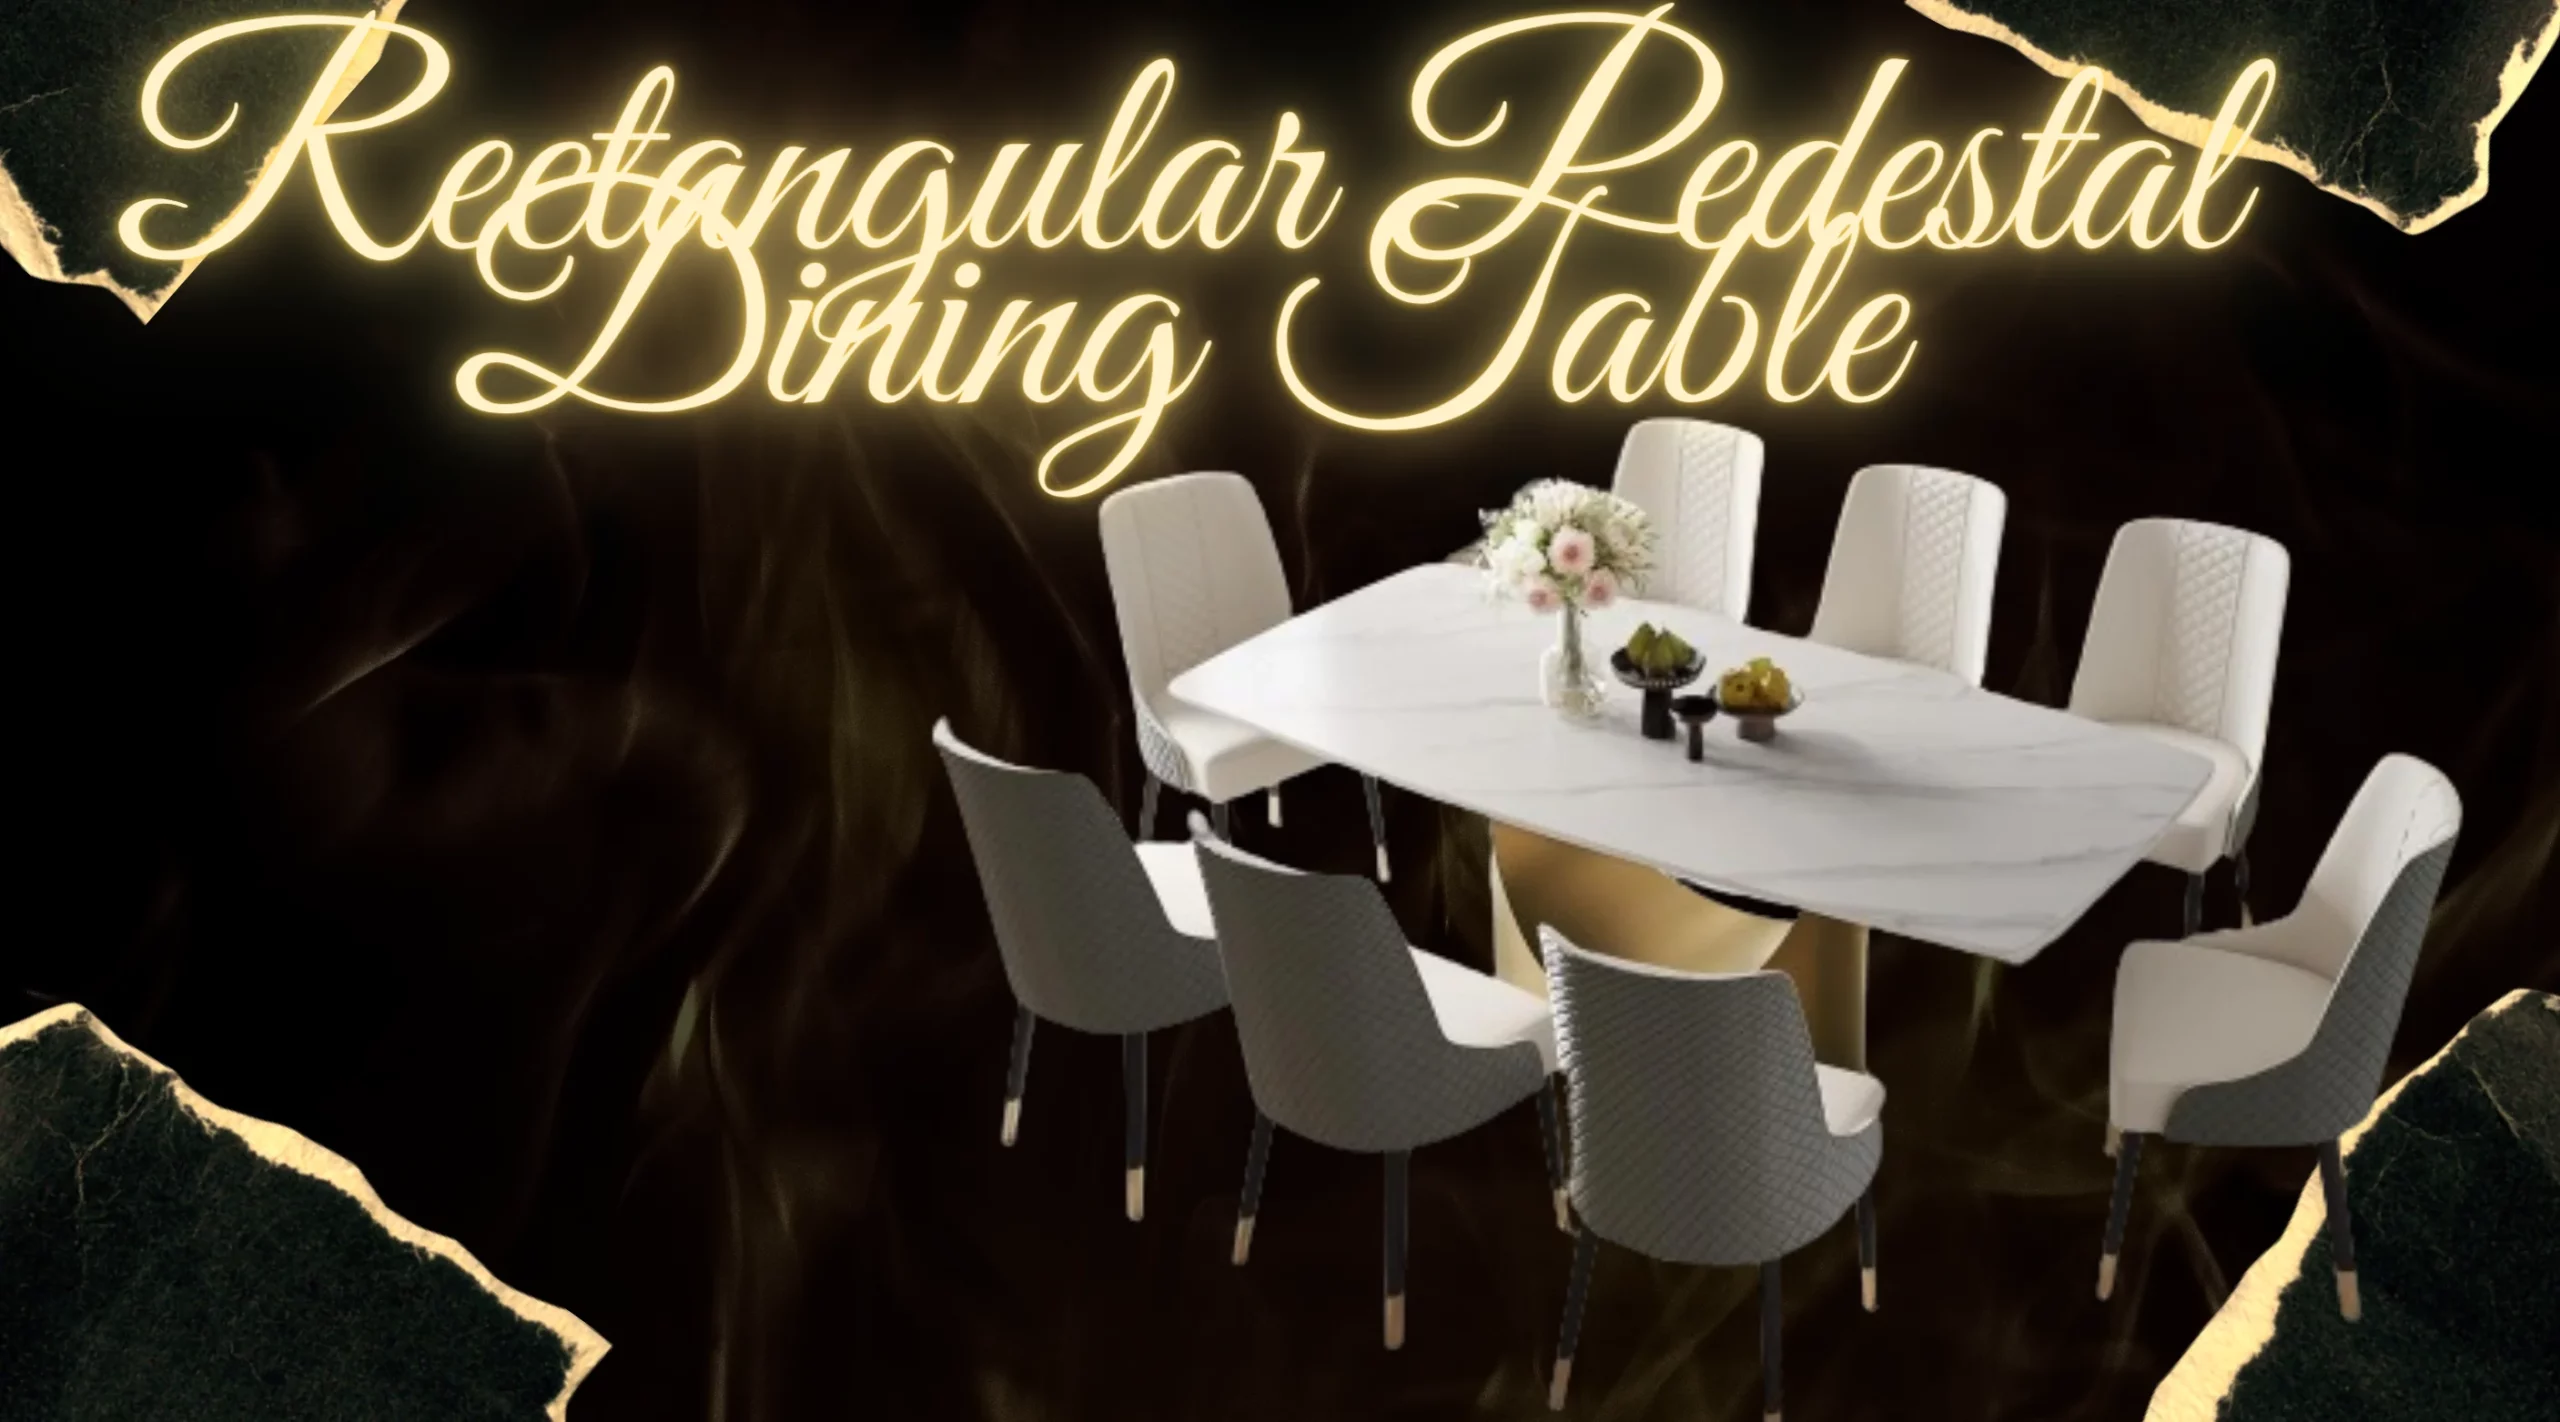 Rectangular Pedestal Dining Table